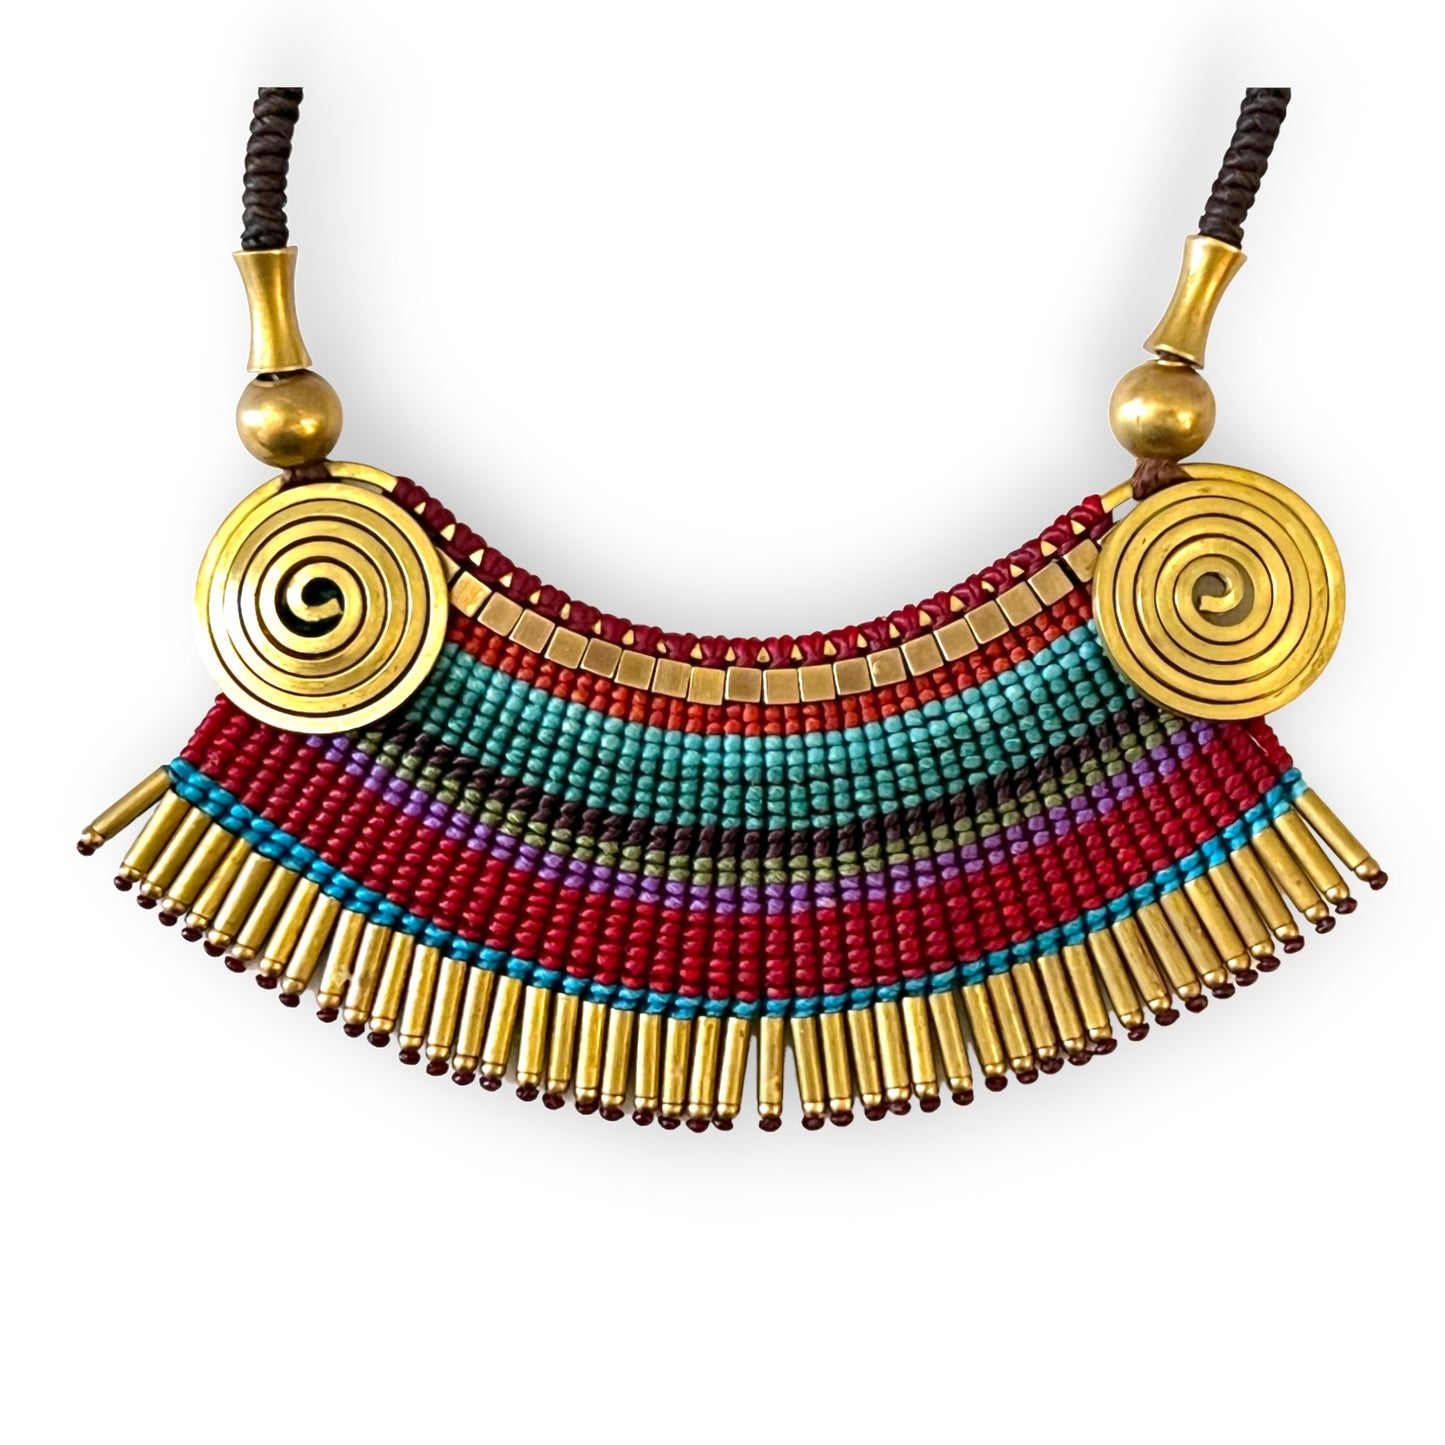 Tribal multi-colored beaded necklace - Sundara Joon